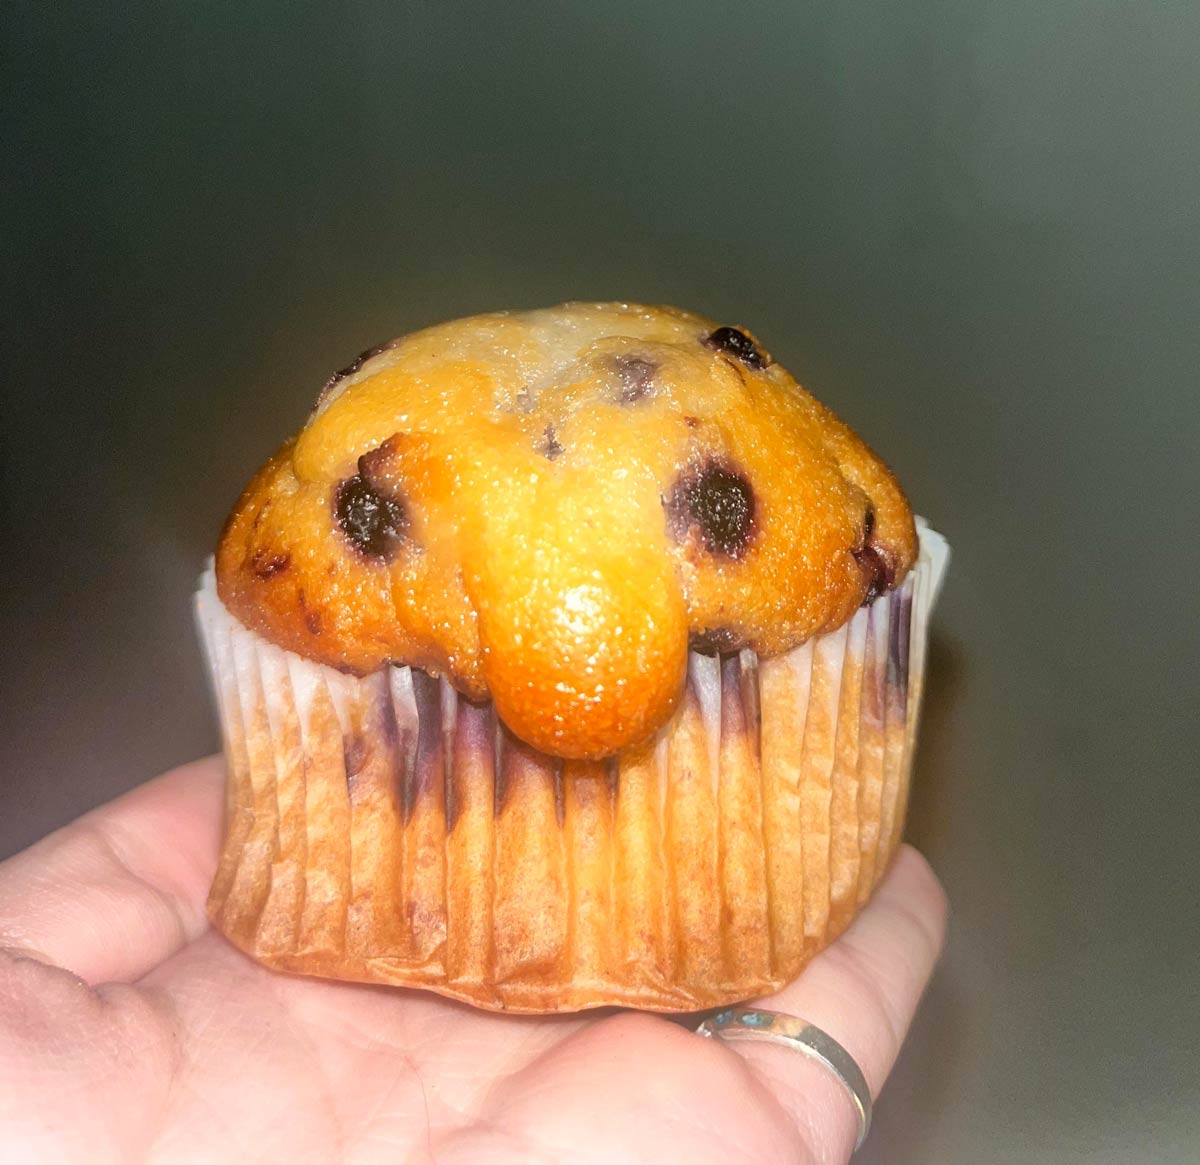 My blueberry muffin looks like a blobfish